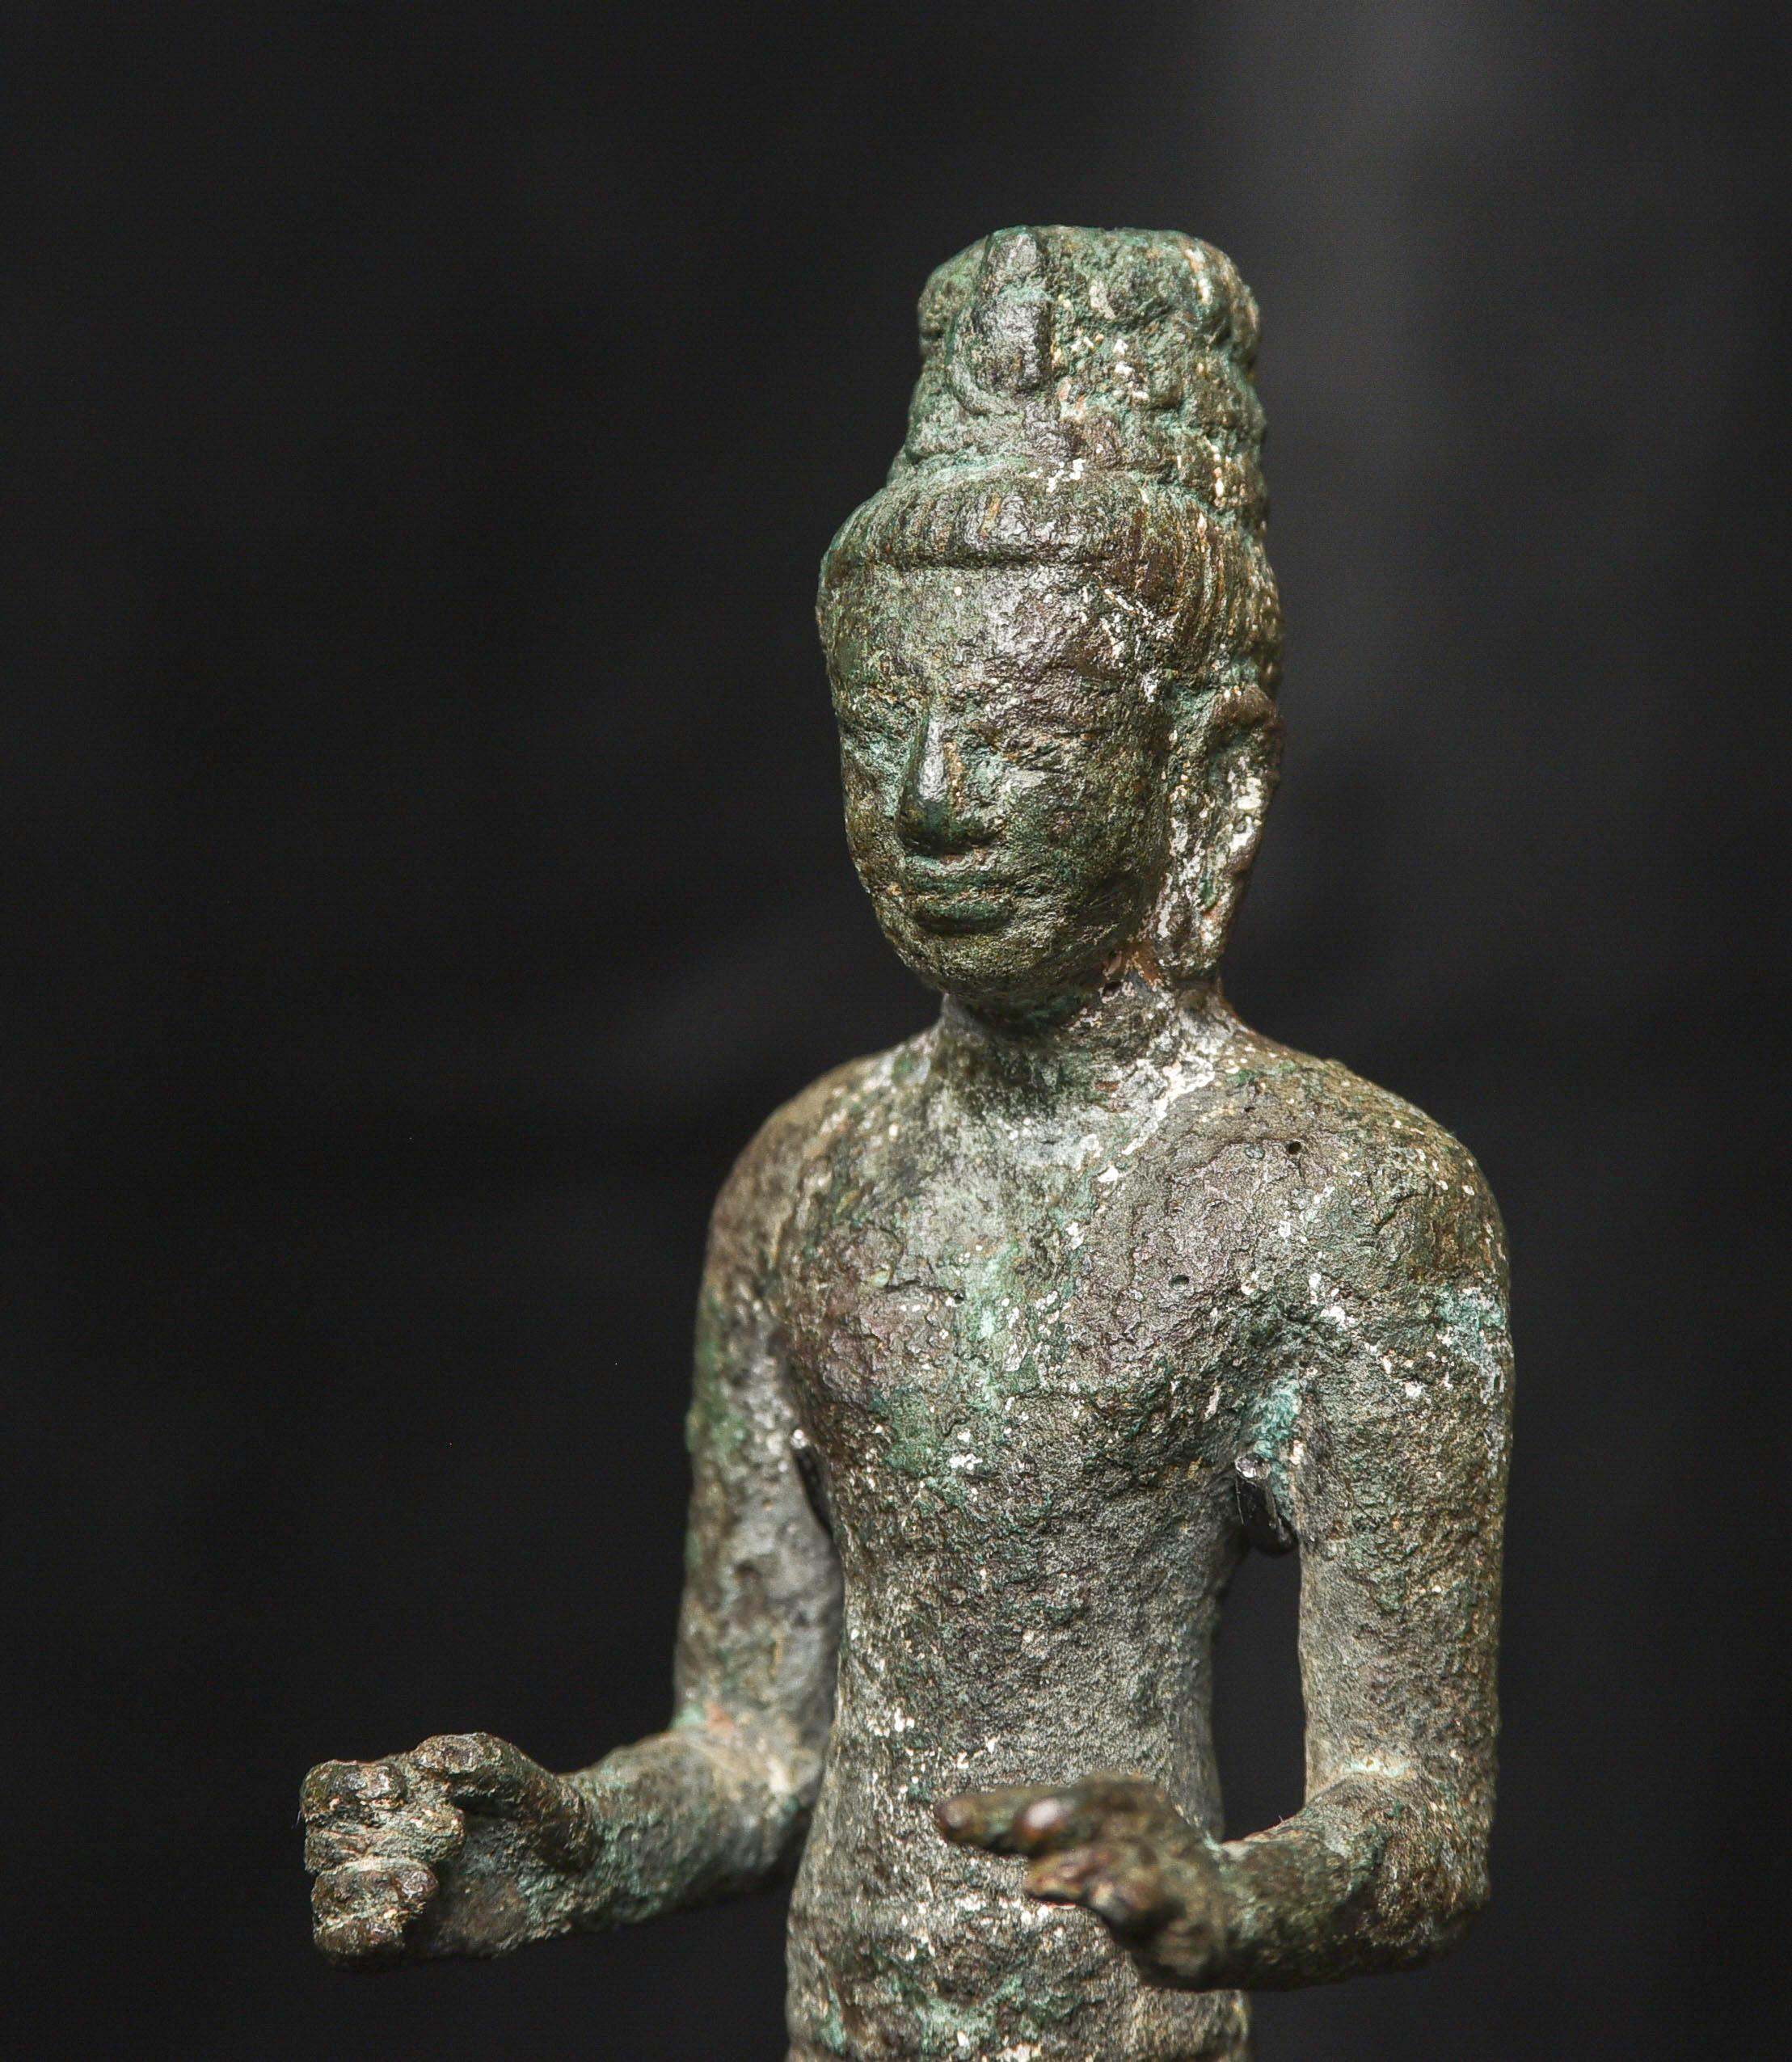 7th/9thC Solid-Cast Bronze Prakhon Chai Buddha or Bodhisattva - 9688 For Sale 5